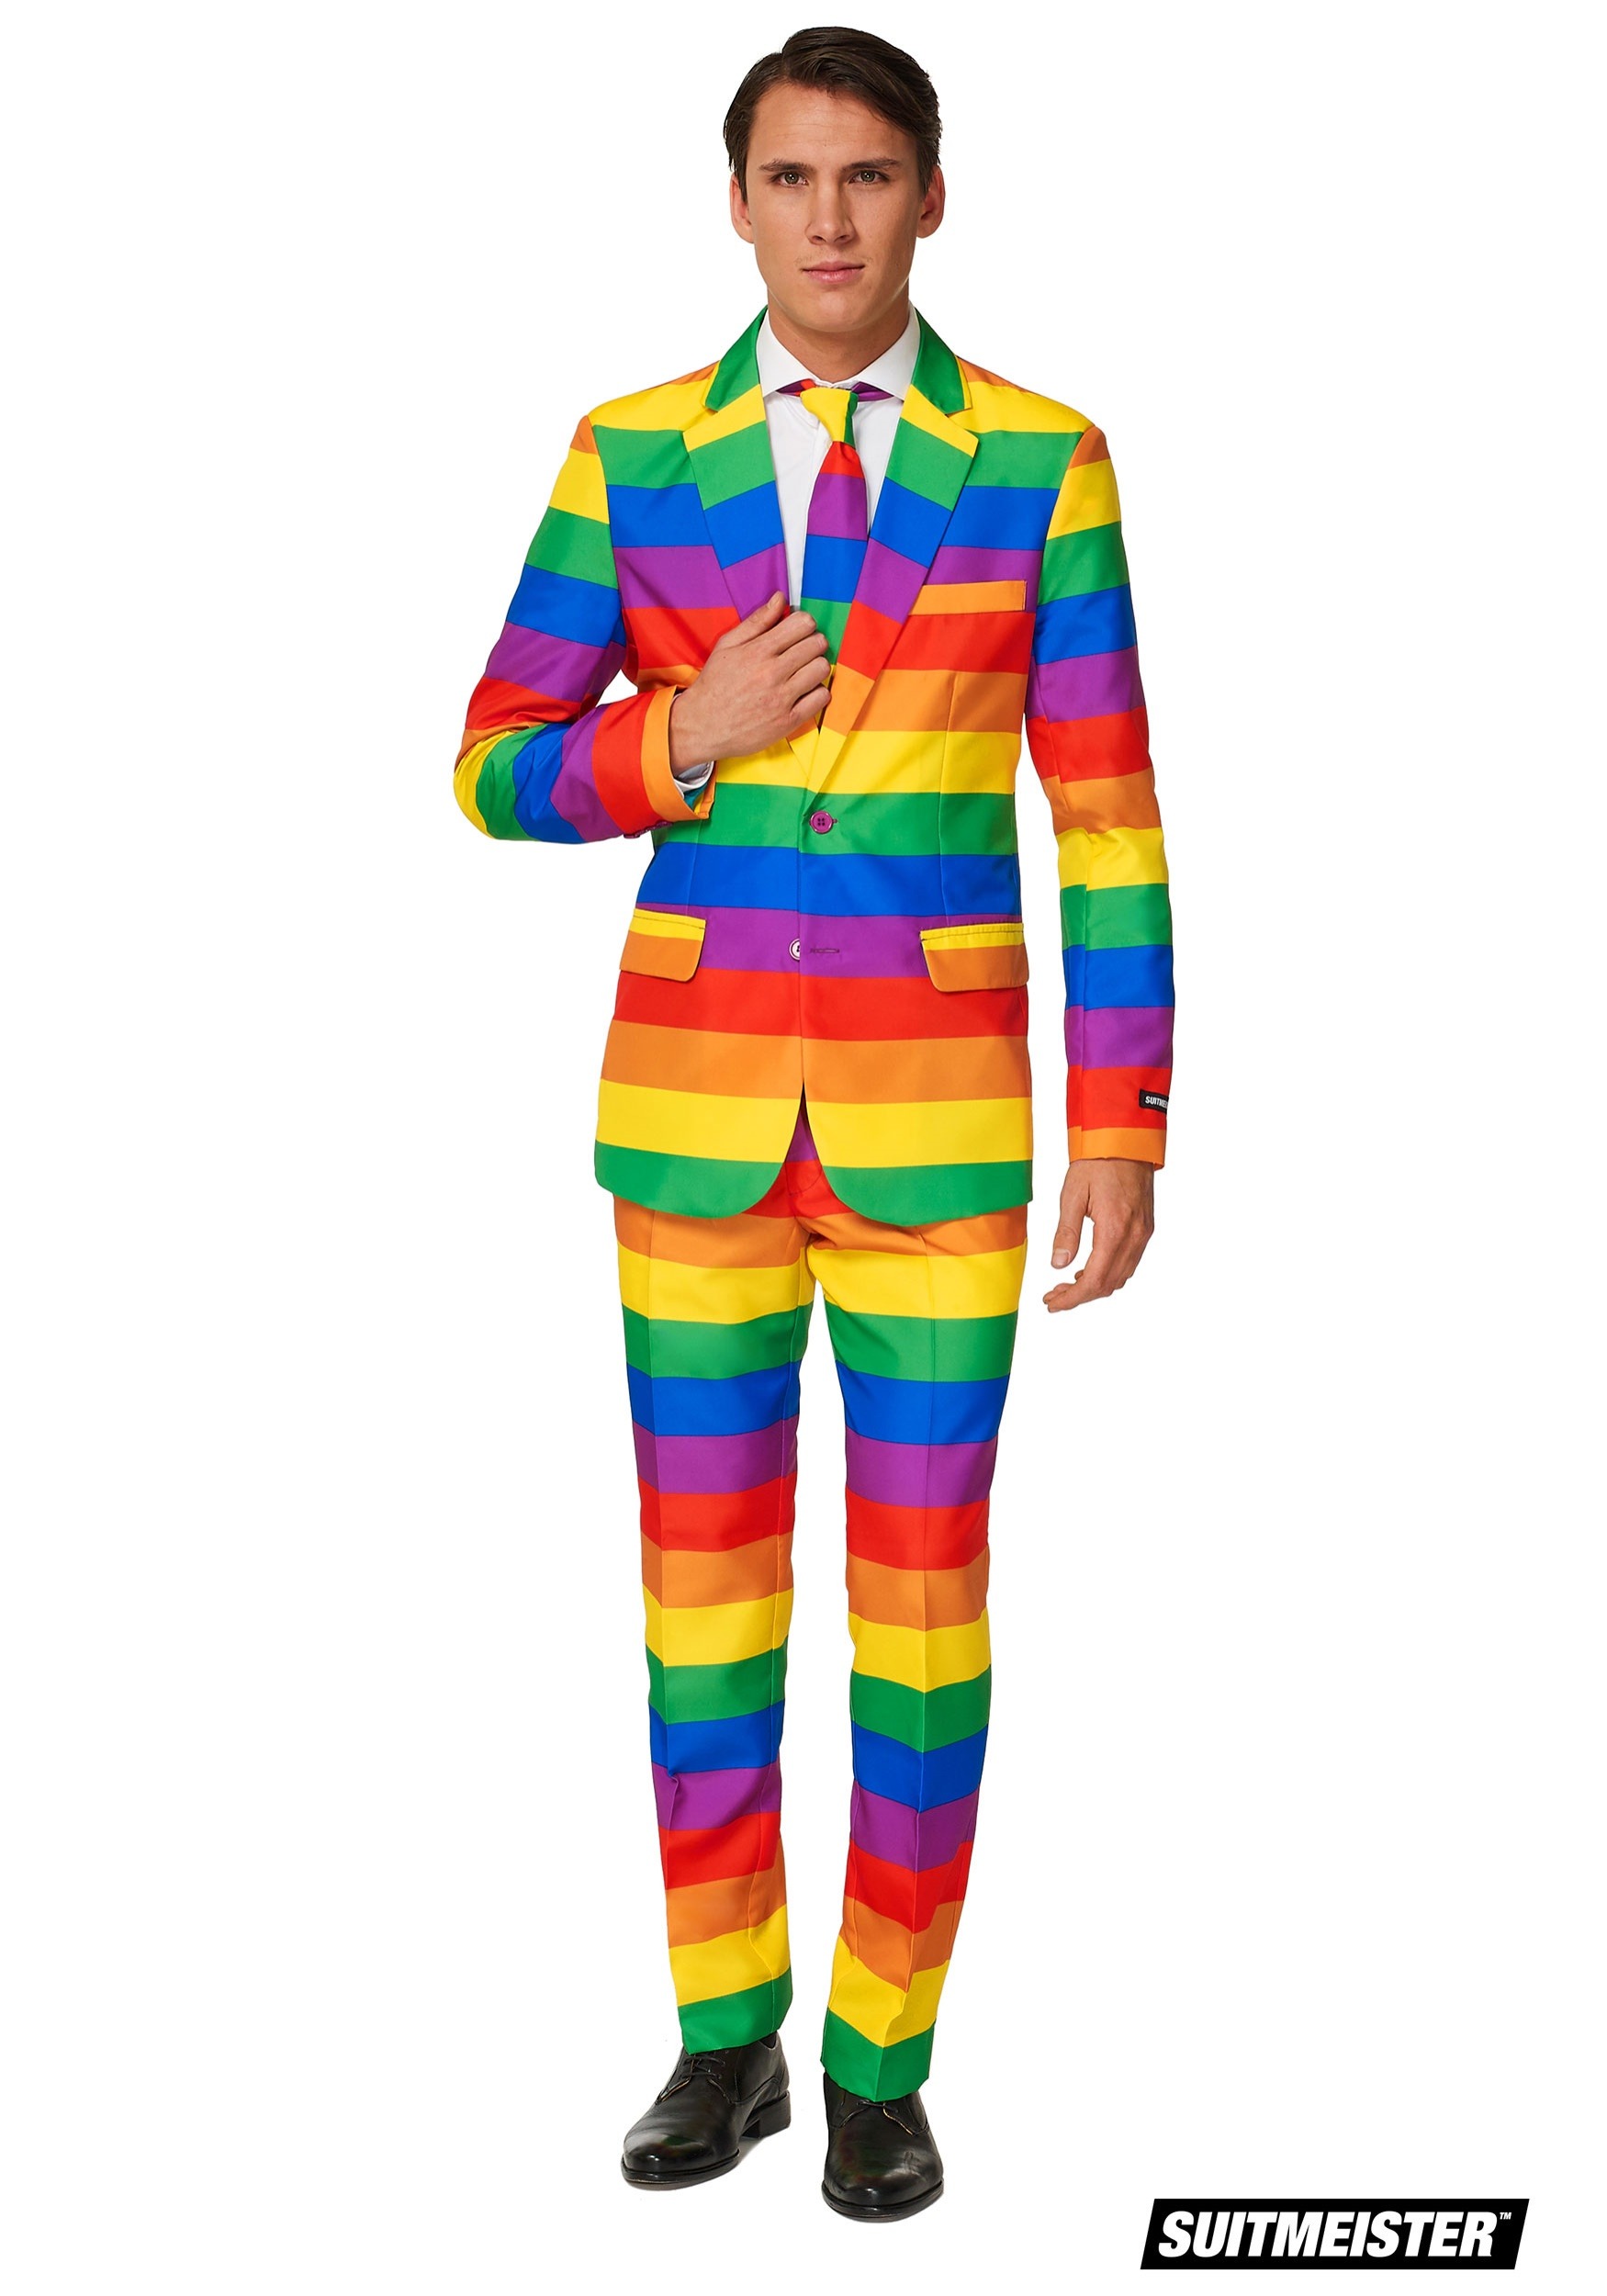 Rainbow Men’s Suitmeister Suit Costume